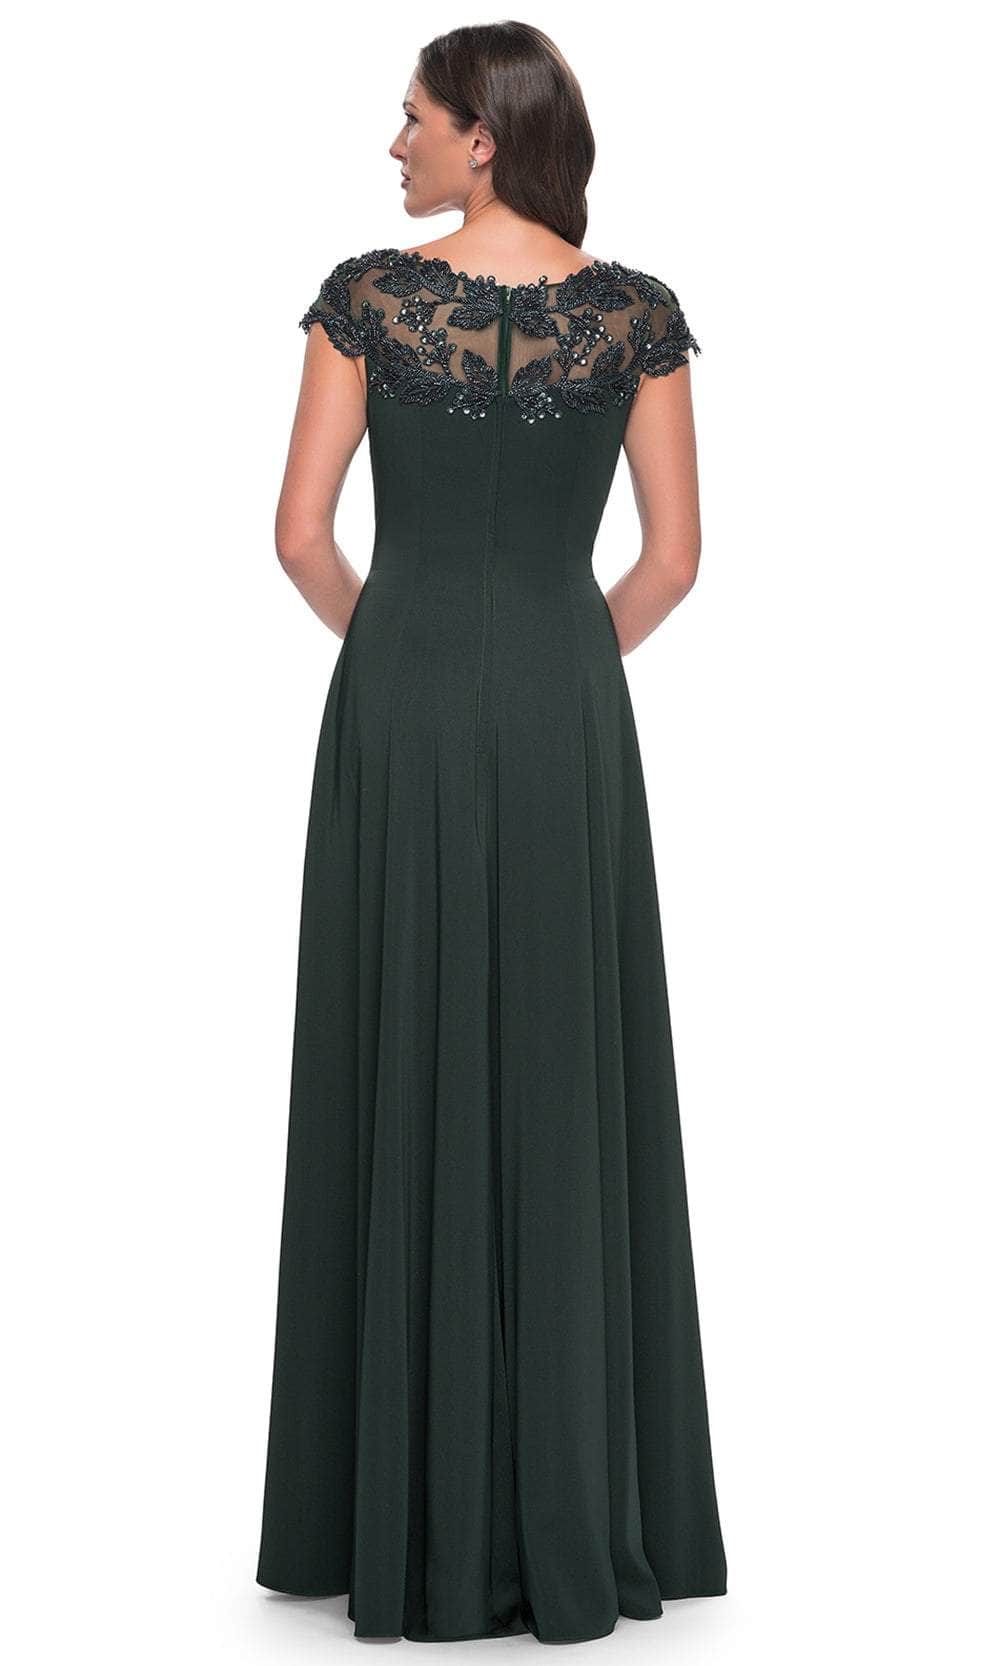 La Femme 31195 - Illusion Bateau Evening Dress Evening Dresses